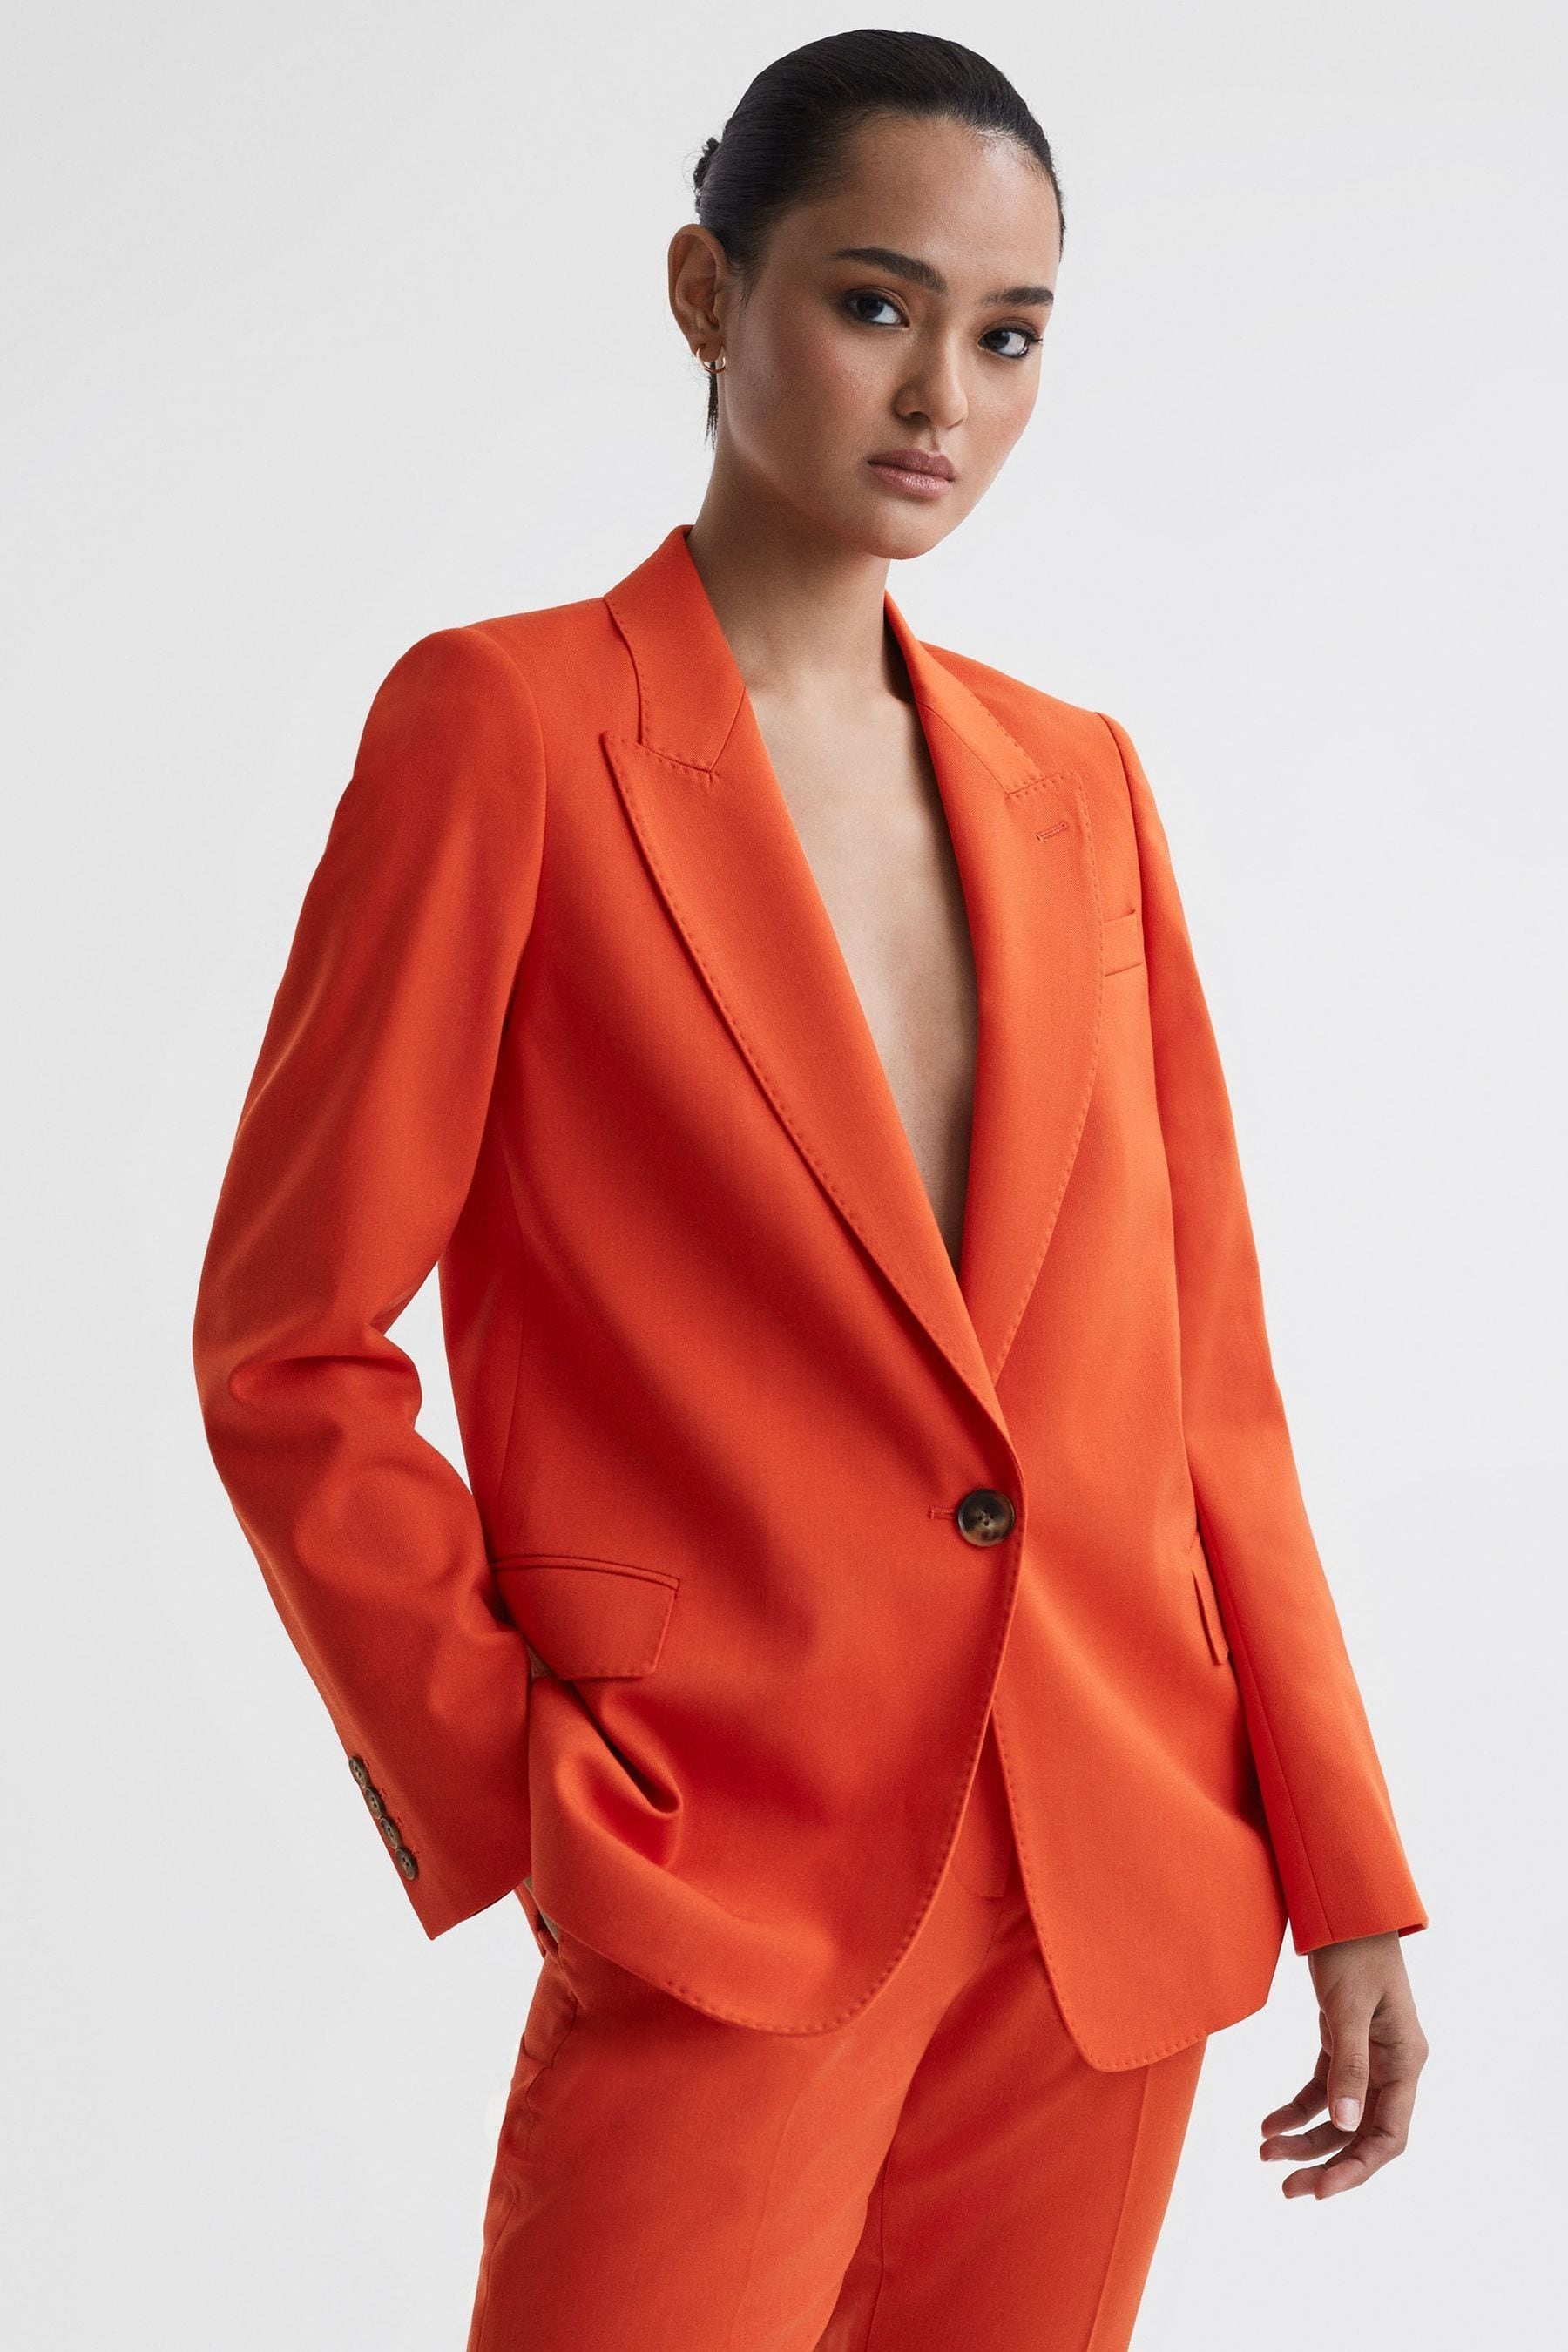 Reiss Celia - Orange Tailored Fit Wool Blend Single Breasted Suit Blazer, Us 2